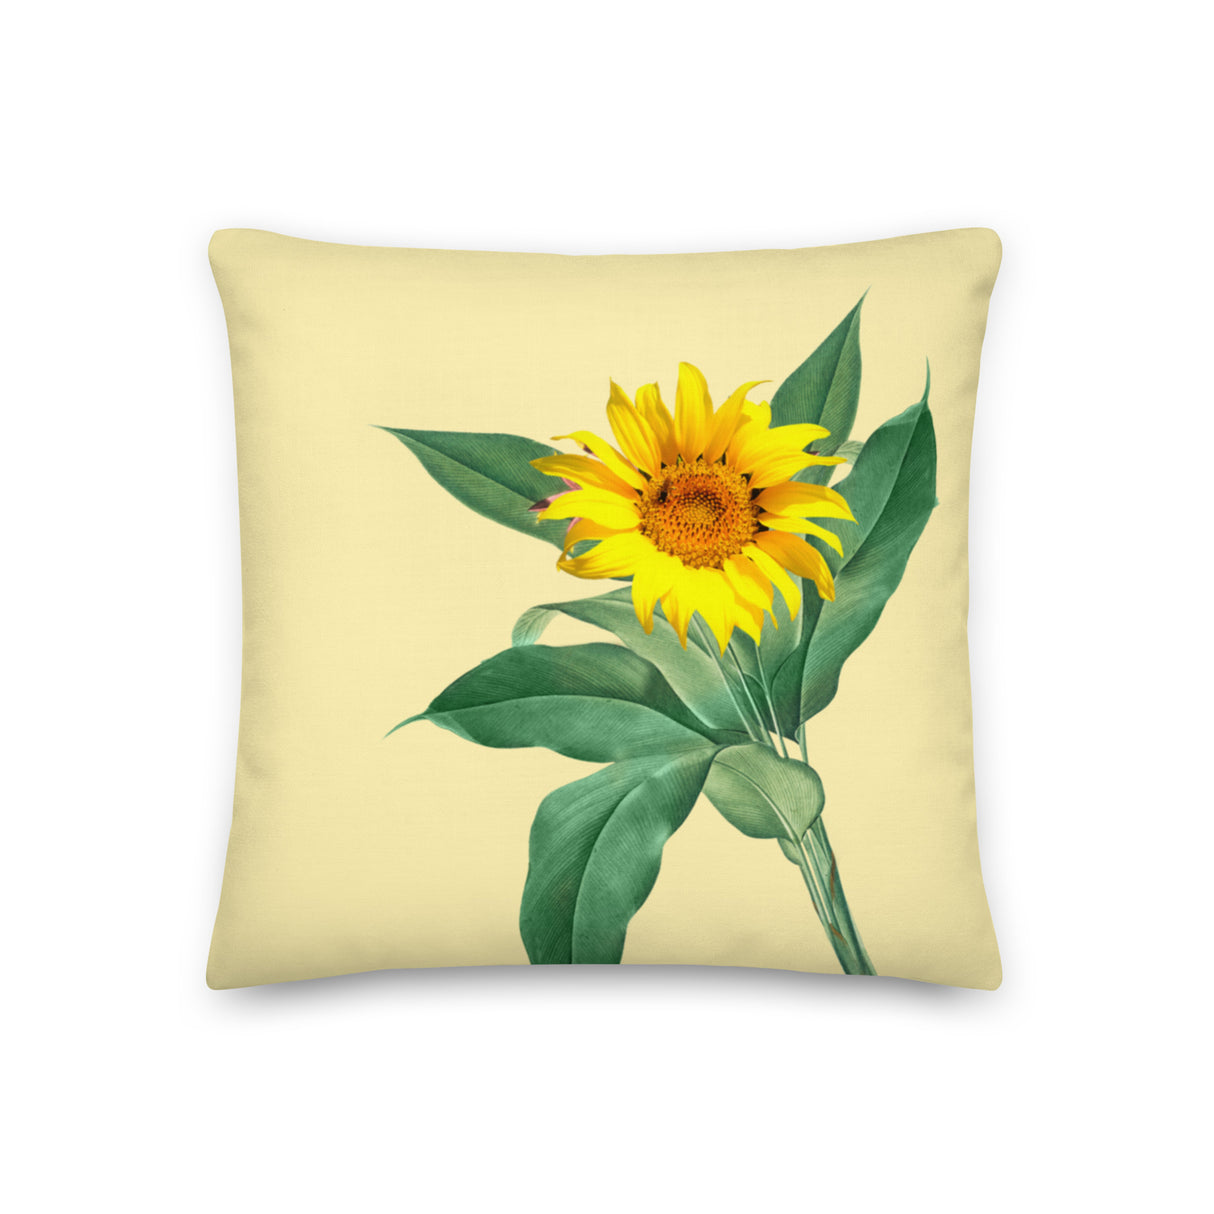 Premium Decorative and Accent Throw Pillow - Sunflower Design in Three Sizes